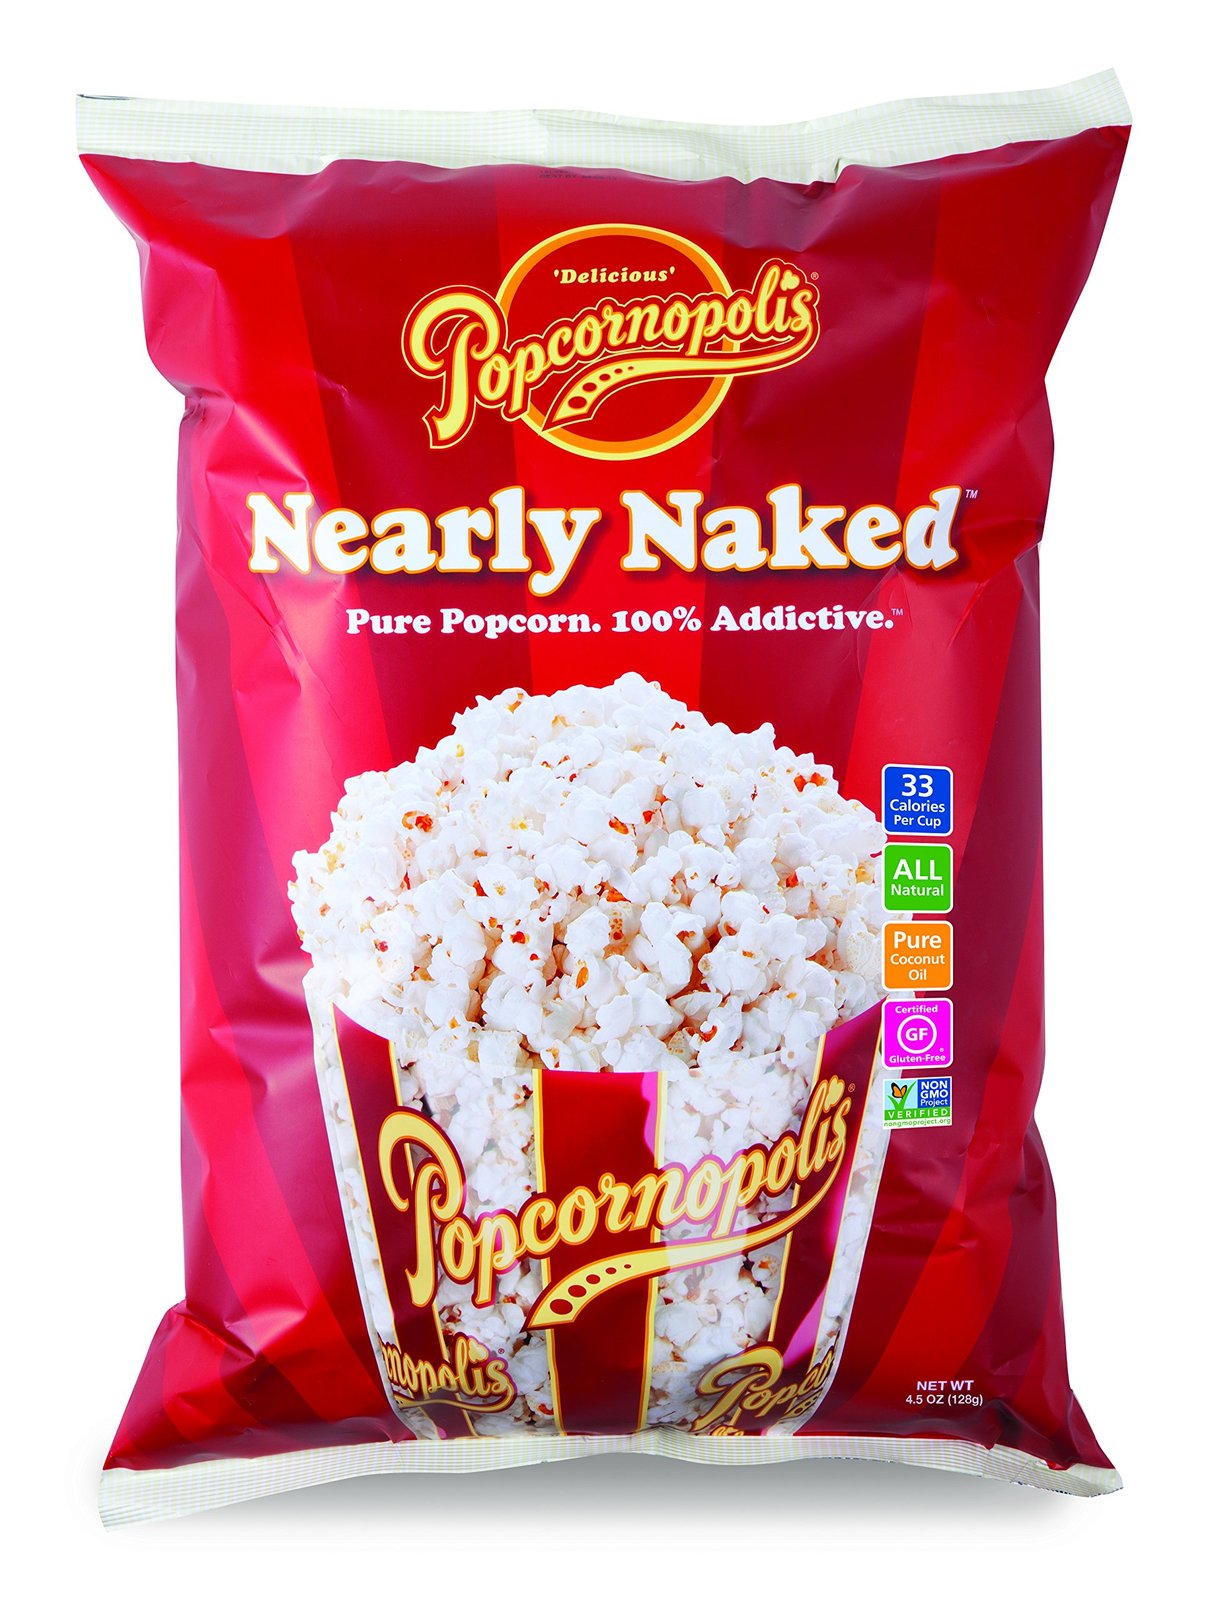 Popcornopolis Organic Nearly Naked Popcorn (14 oz) from 